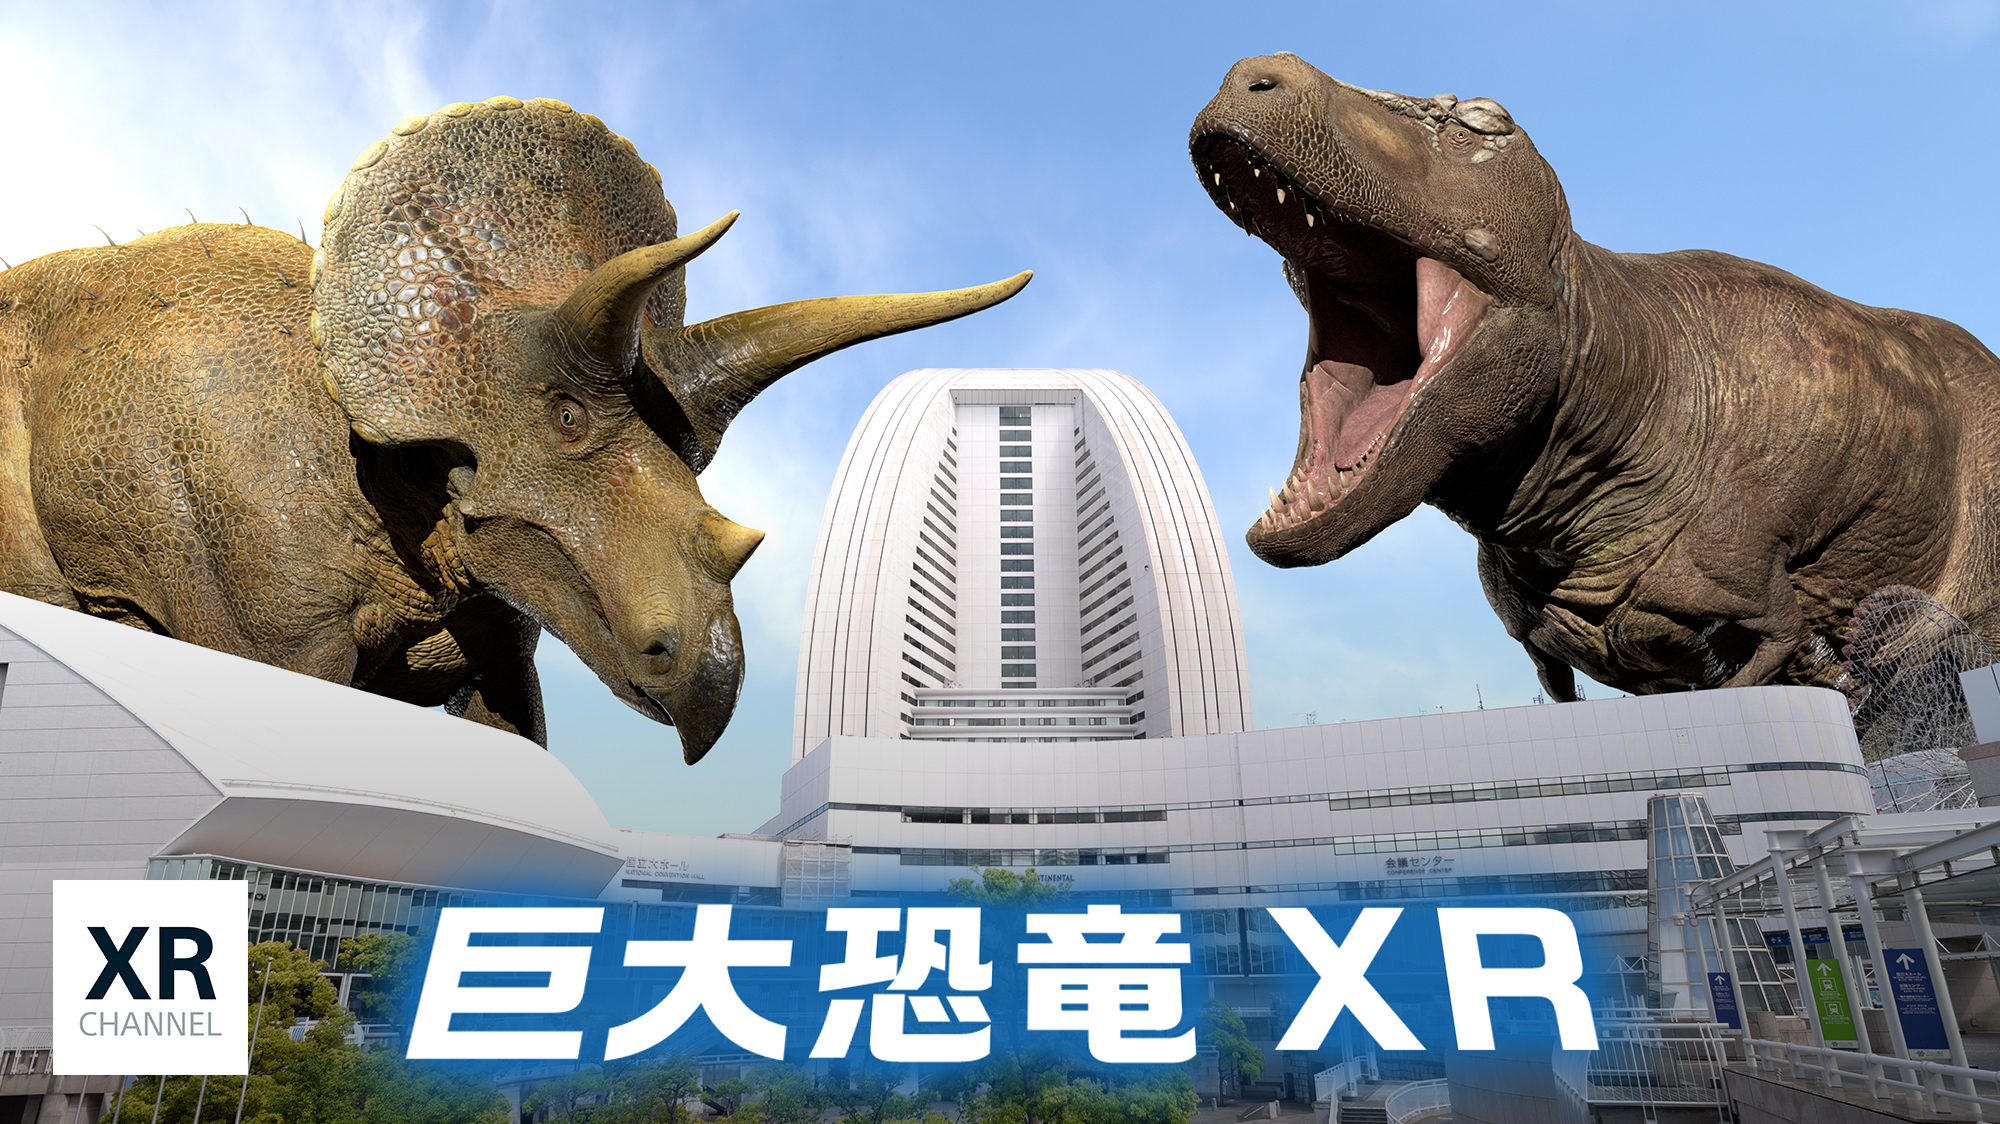 XR CHANNEL 横浜巨大恐竜XR